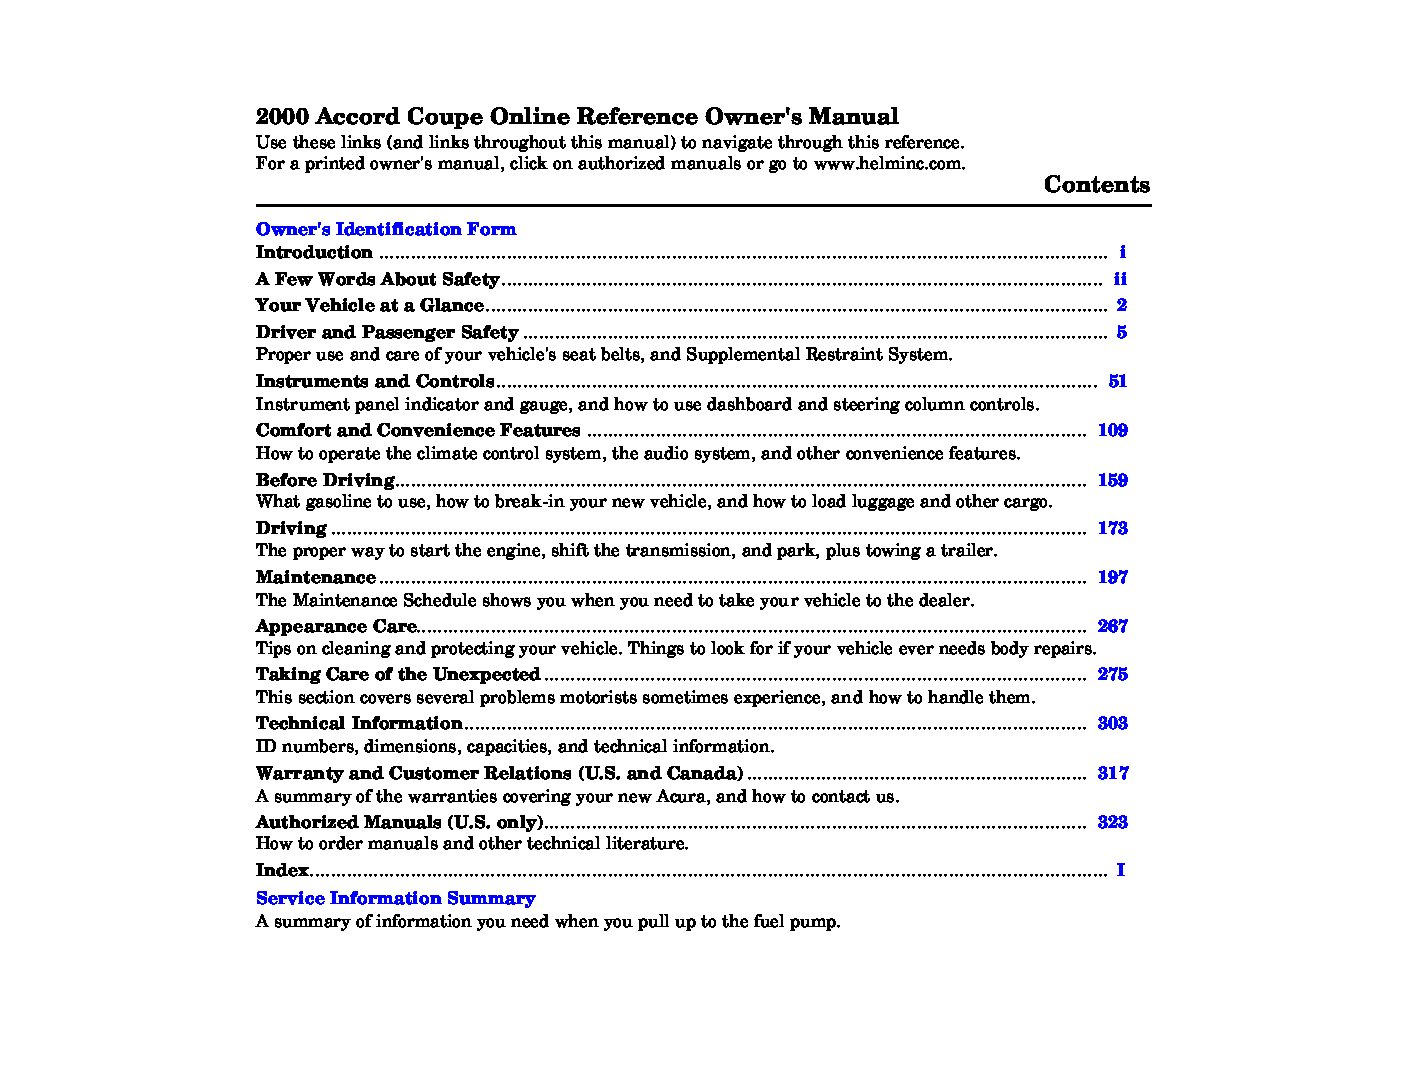 2000 honda accord manual pdf